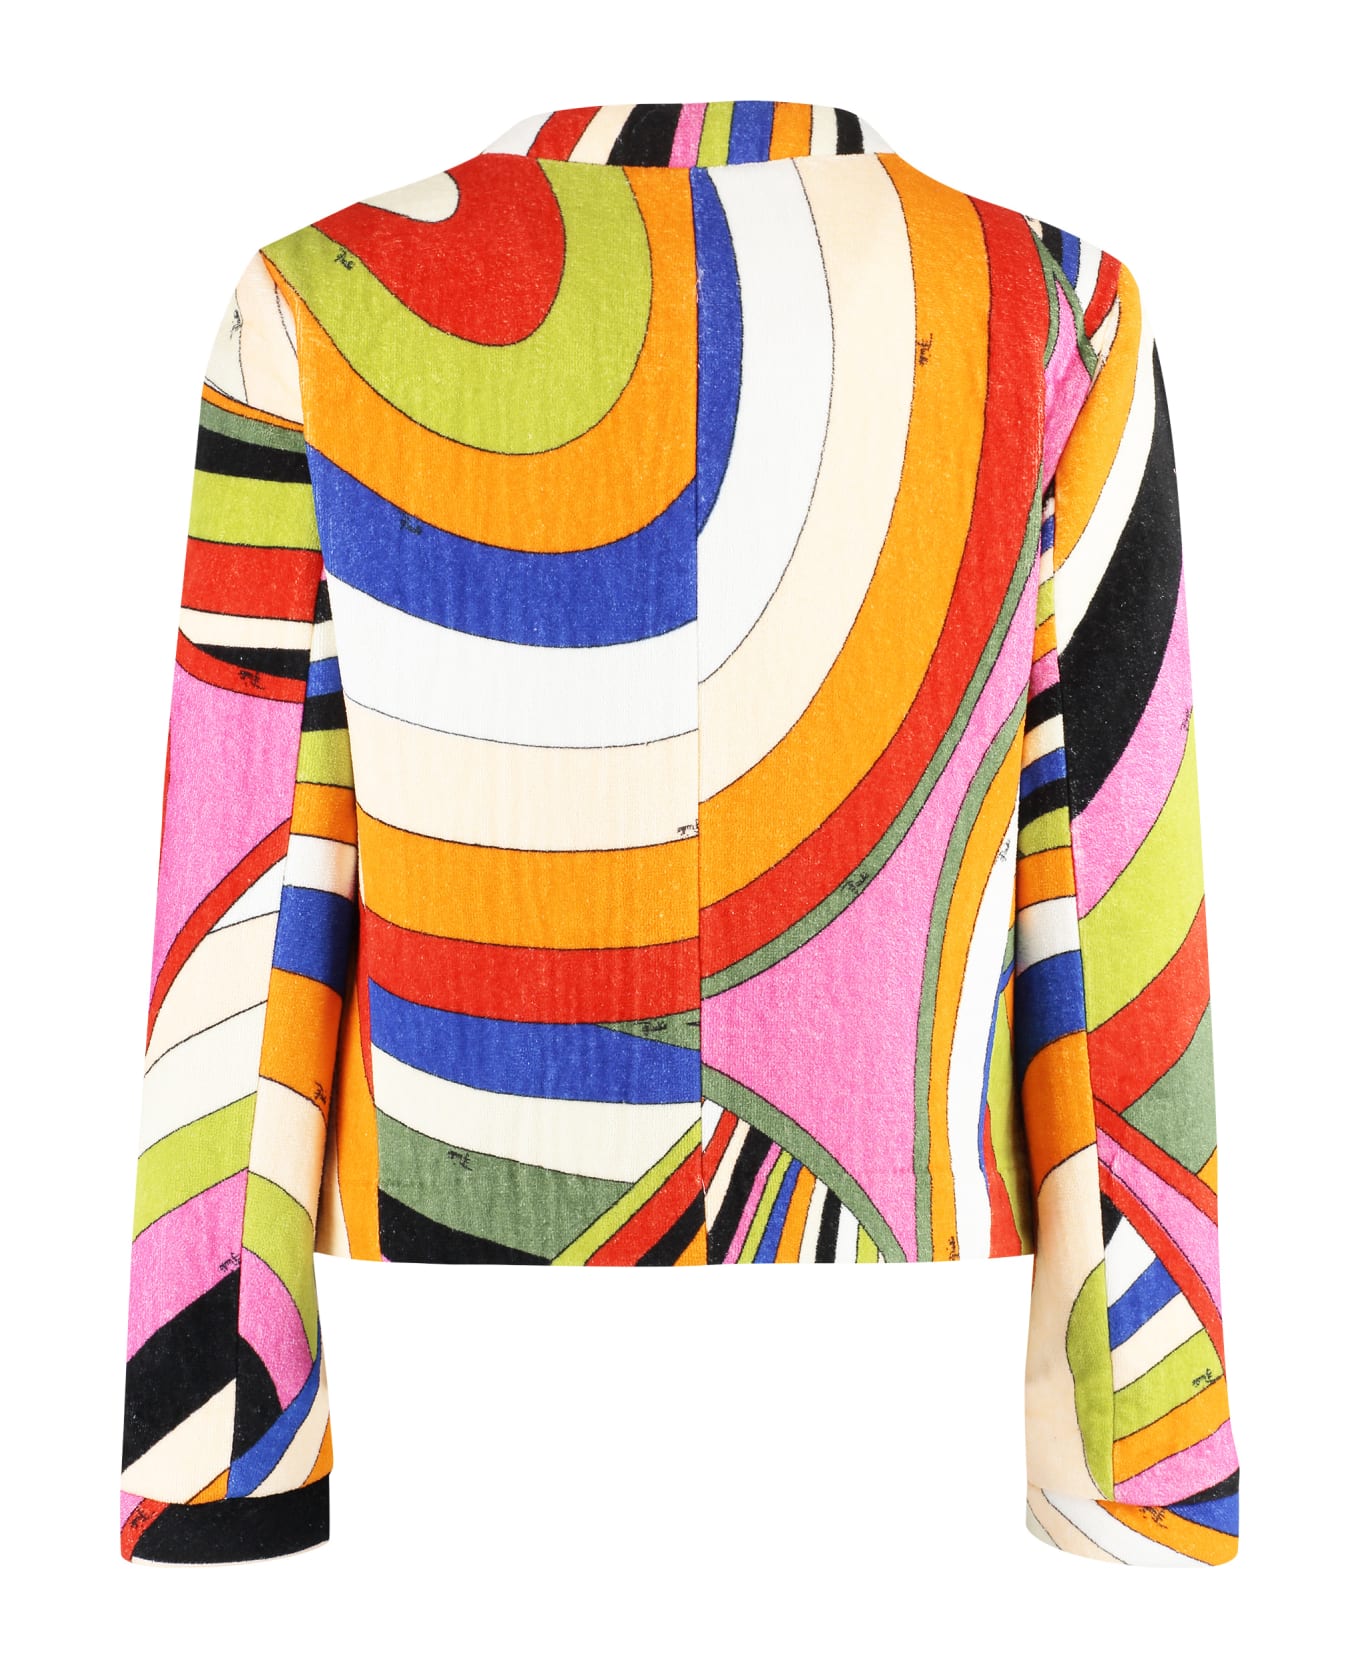 Pucci Printed Cotton Jacket - Multicolor ジャケット